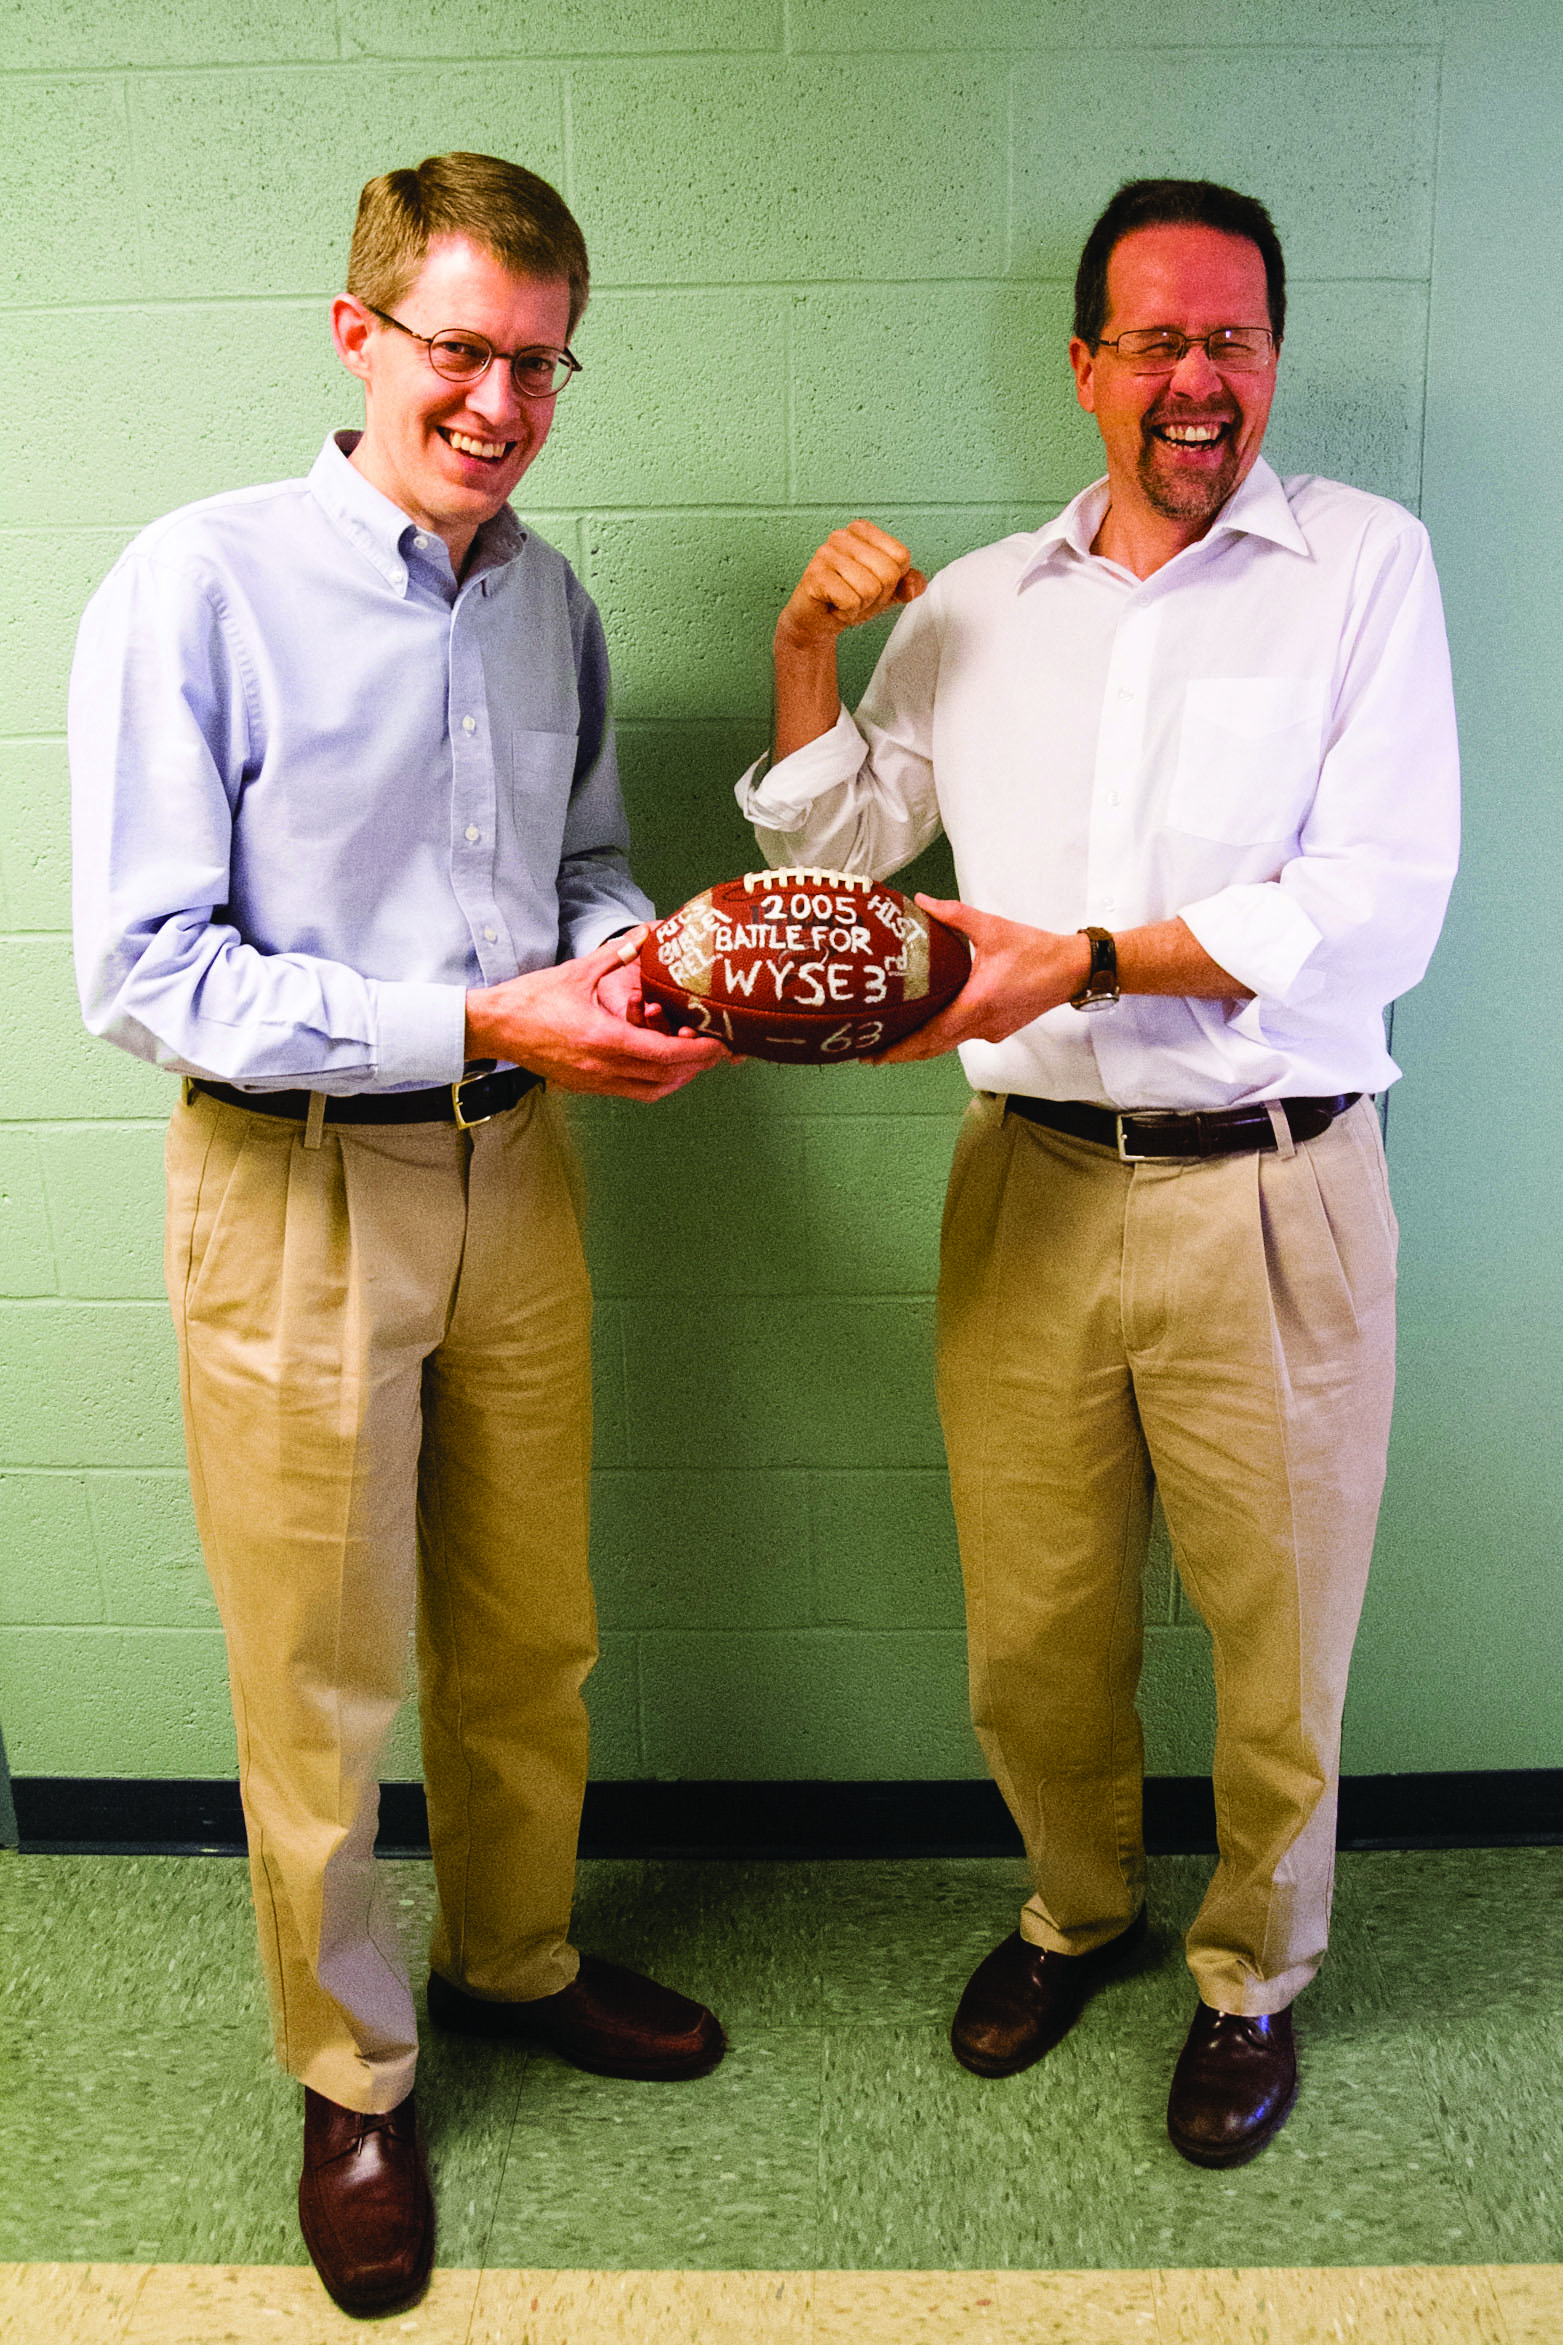 Professors Steven Nolt and John Roth hold the famed "Battle for Wyse 3" football